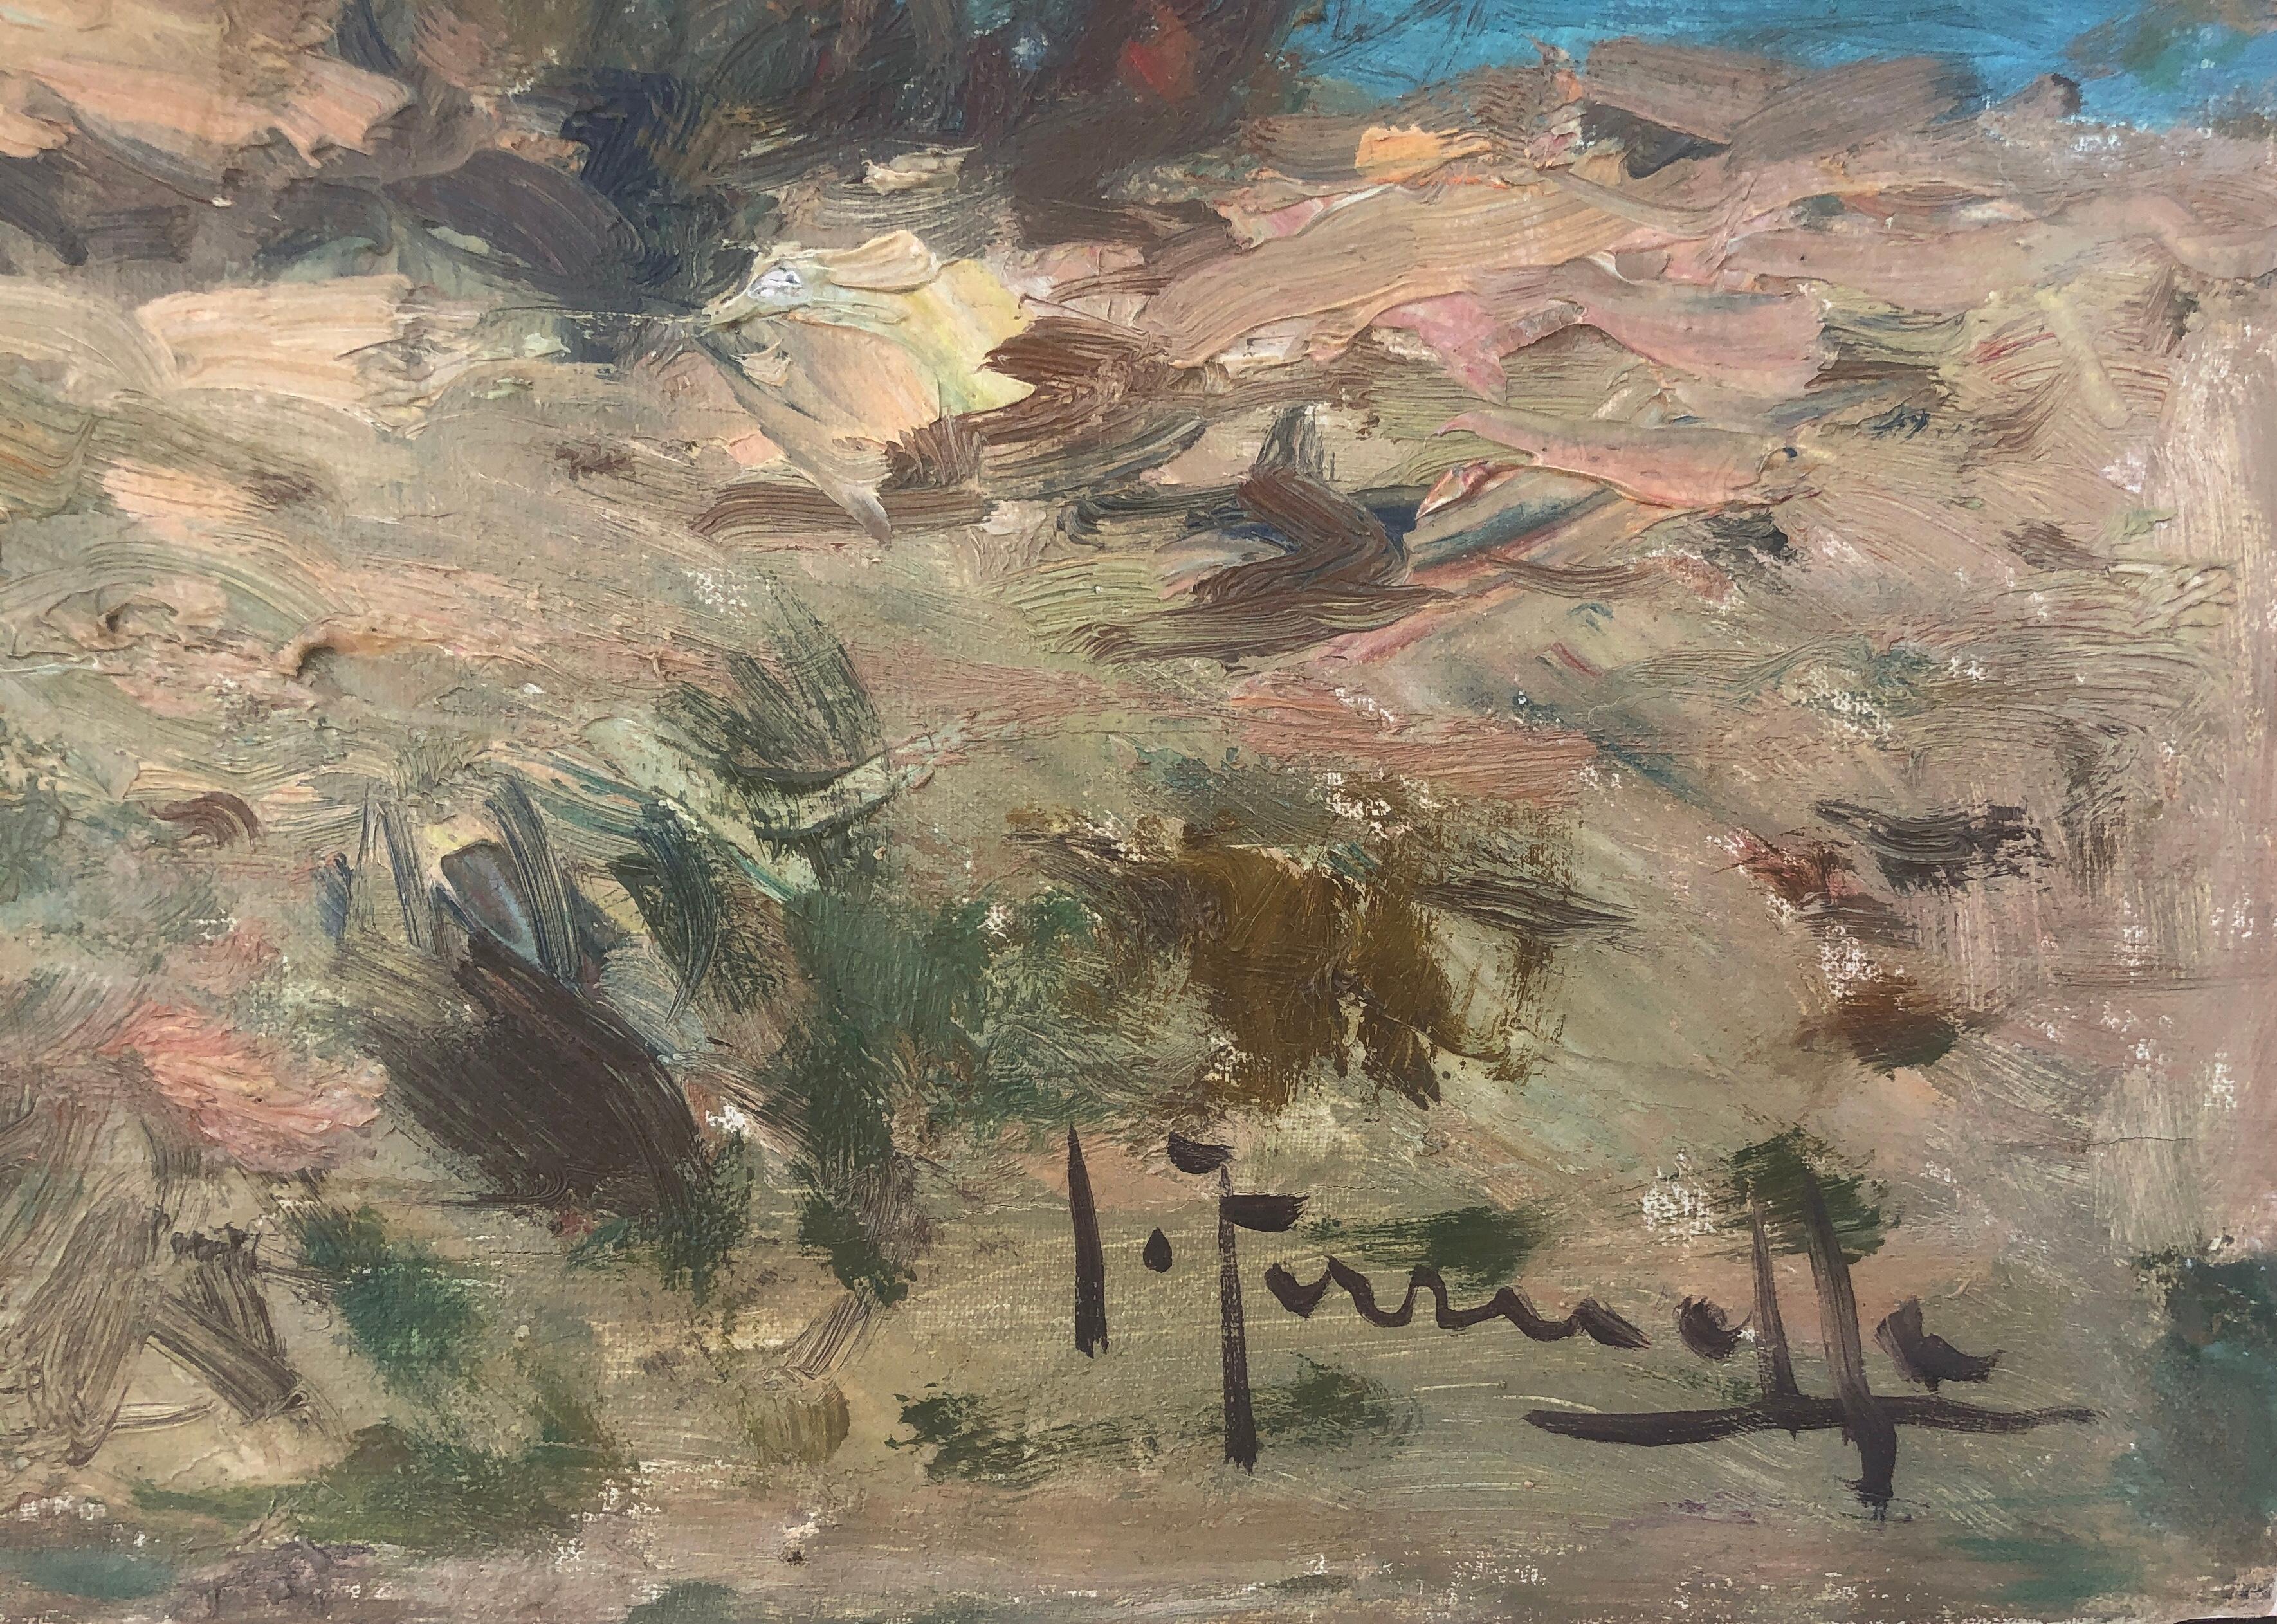 Costa Brava seascape oil on canvas painting impressionism Spain mediterranean - Painting by Joaquin Terruella Matilla